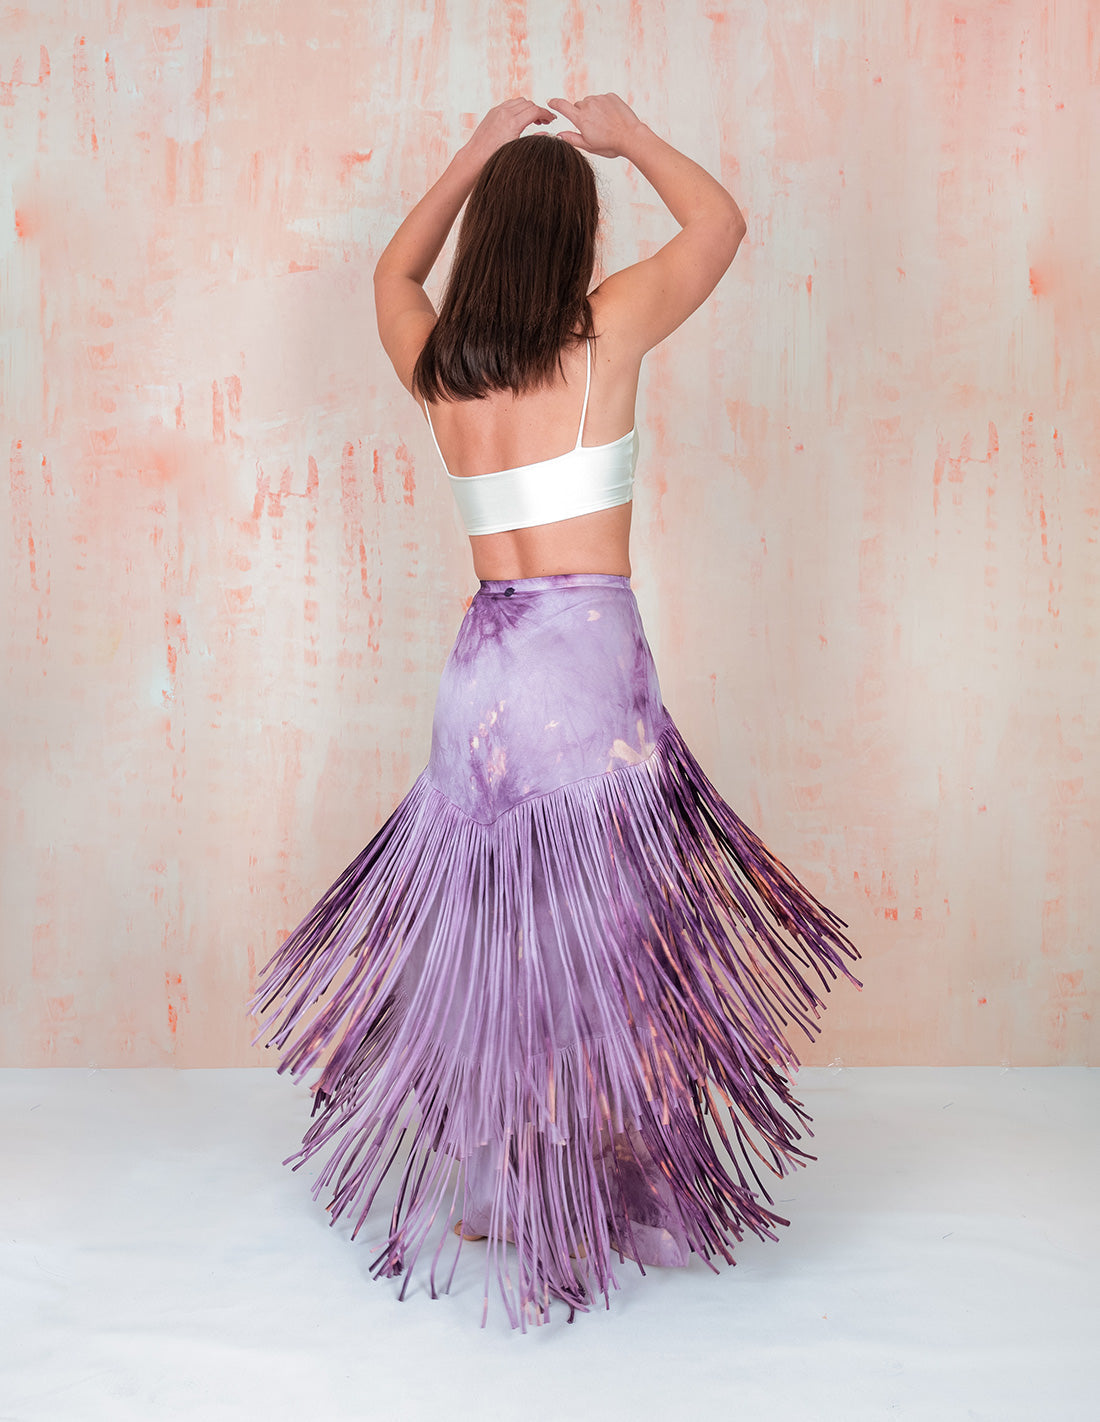 Rigel Skirt Purple. Hand-Dyed Beach Skirt In Purple. Entreaguas